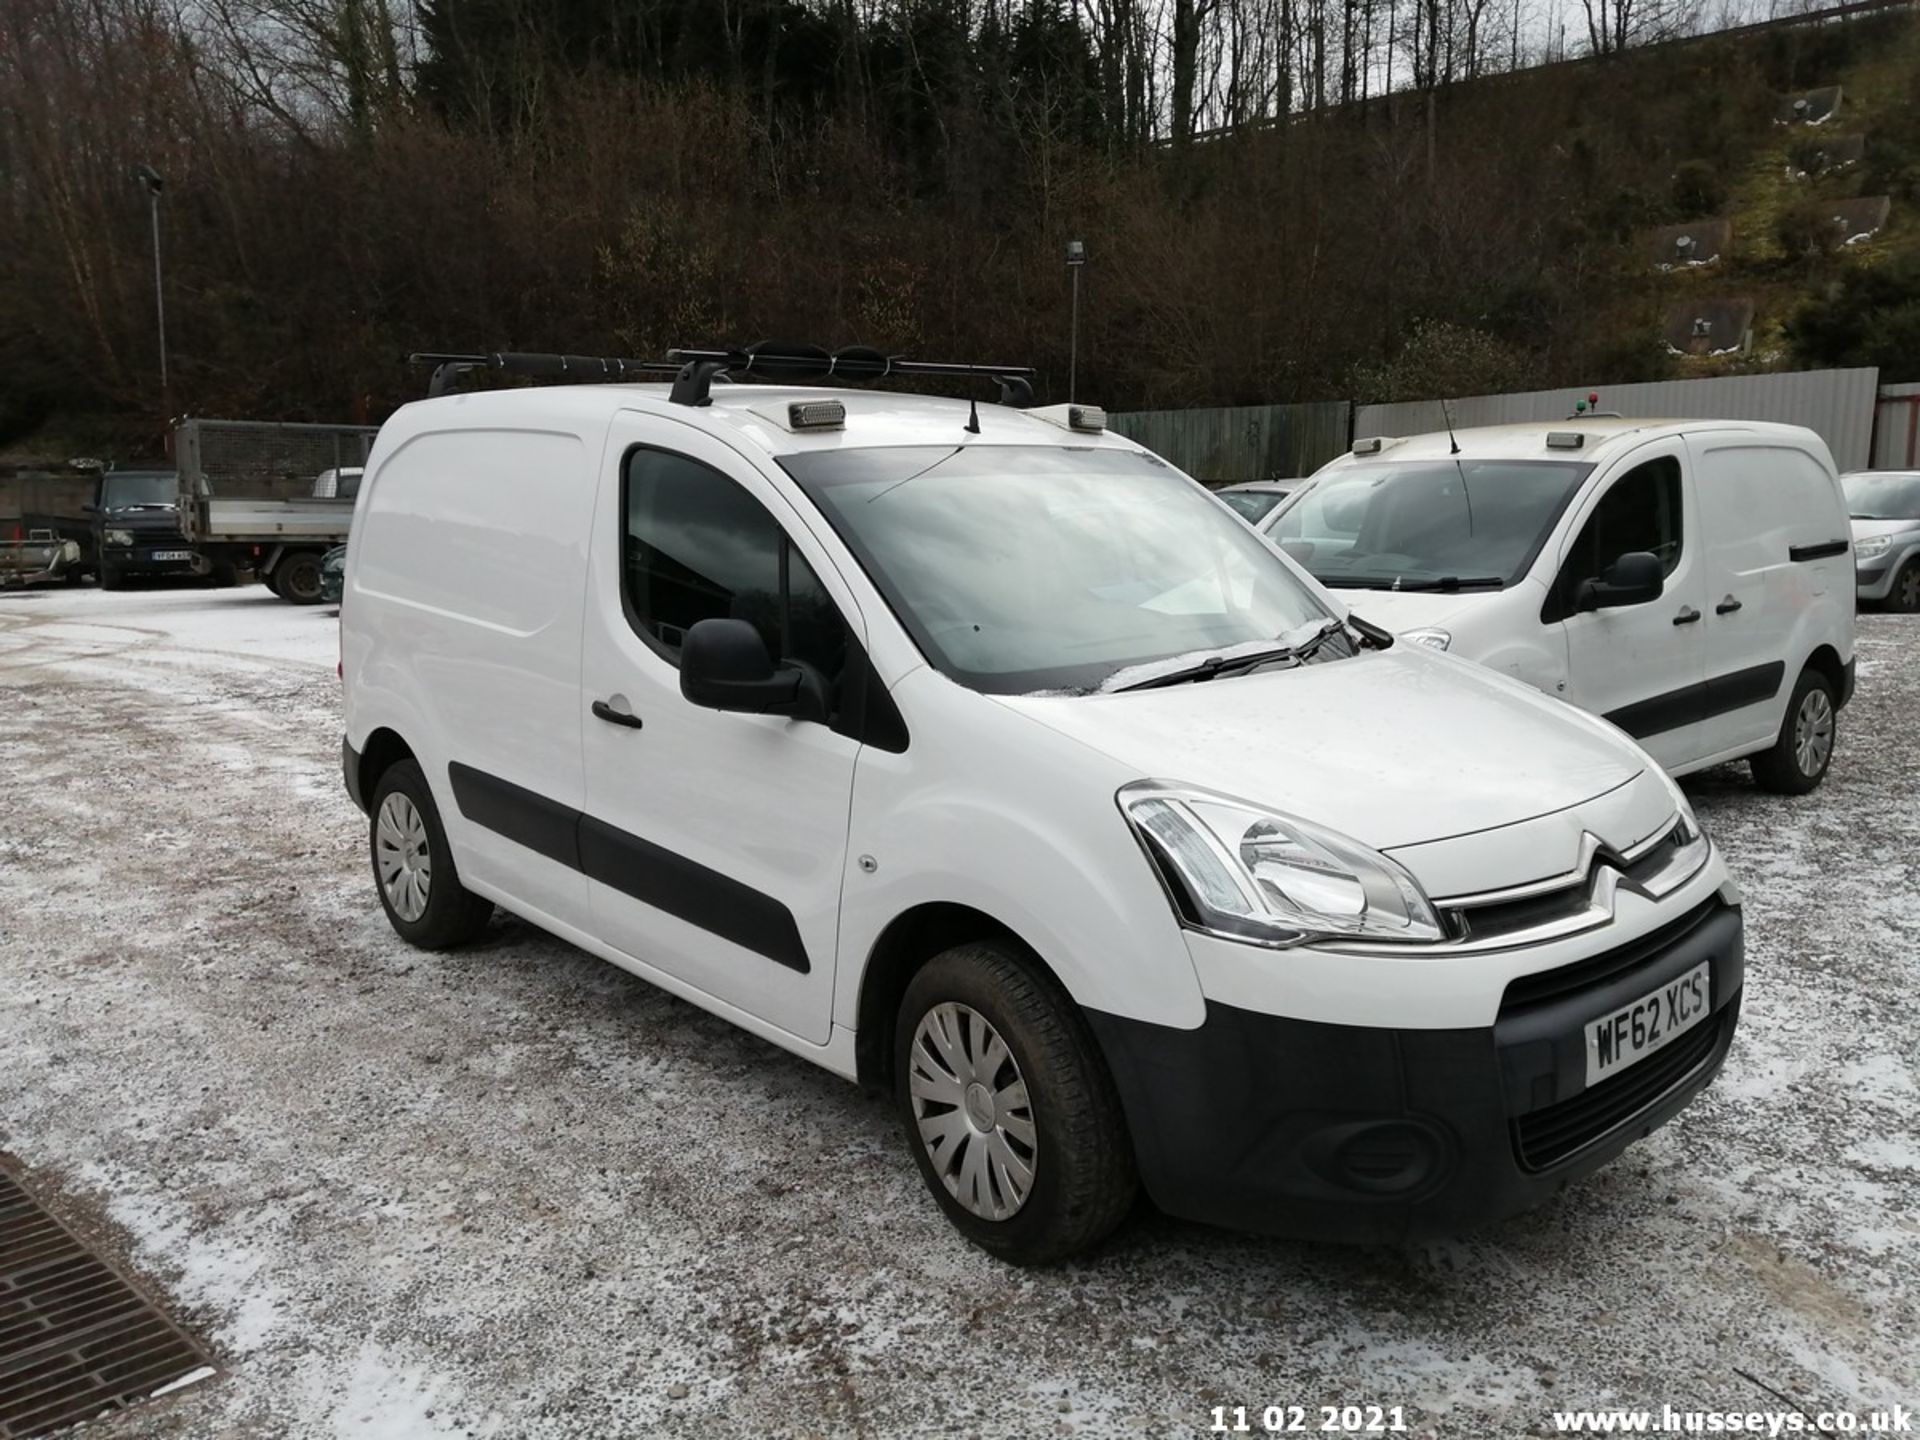 12/62 CITROEN BERLINGO 850 LX HDI - 1560cc 5dr Van (White, 27k) - Image 8 of 12